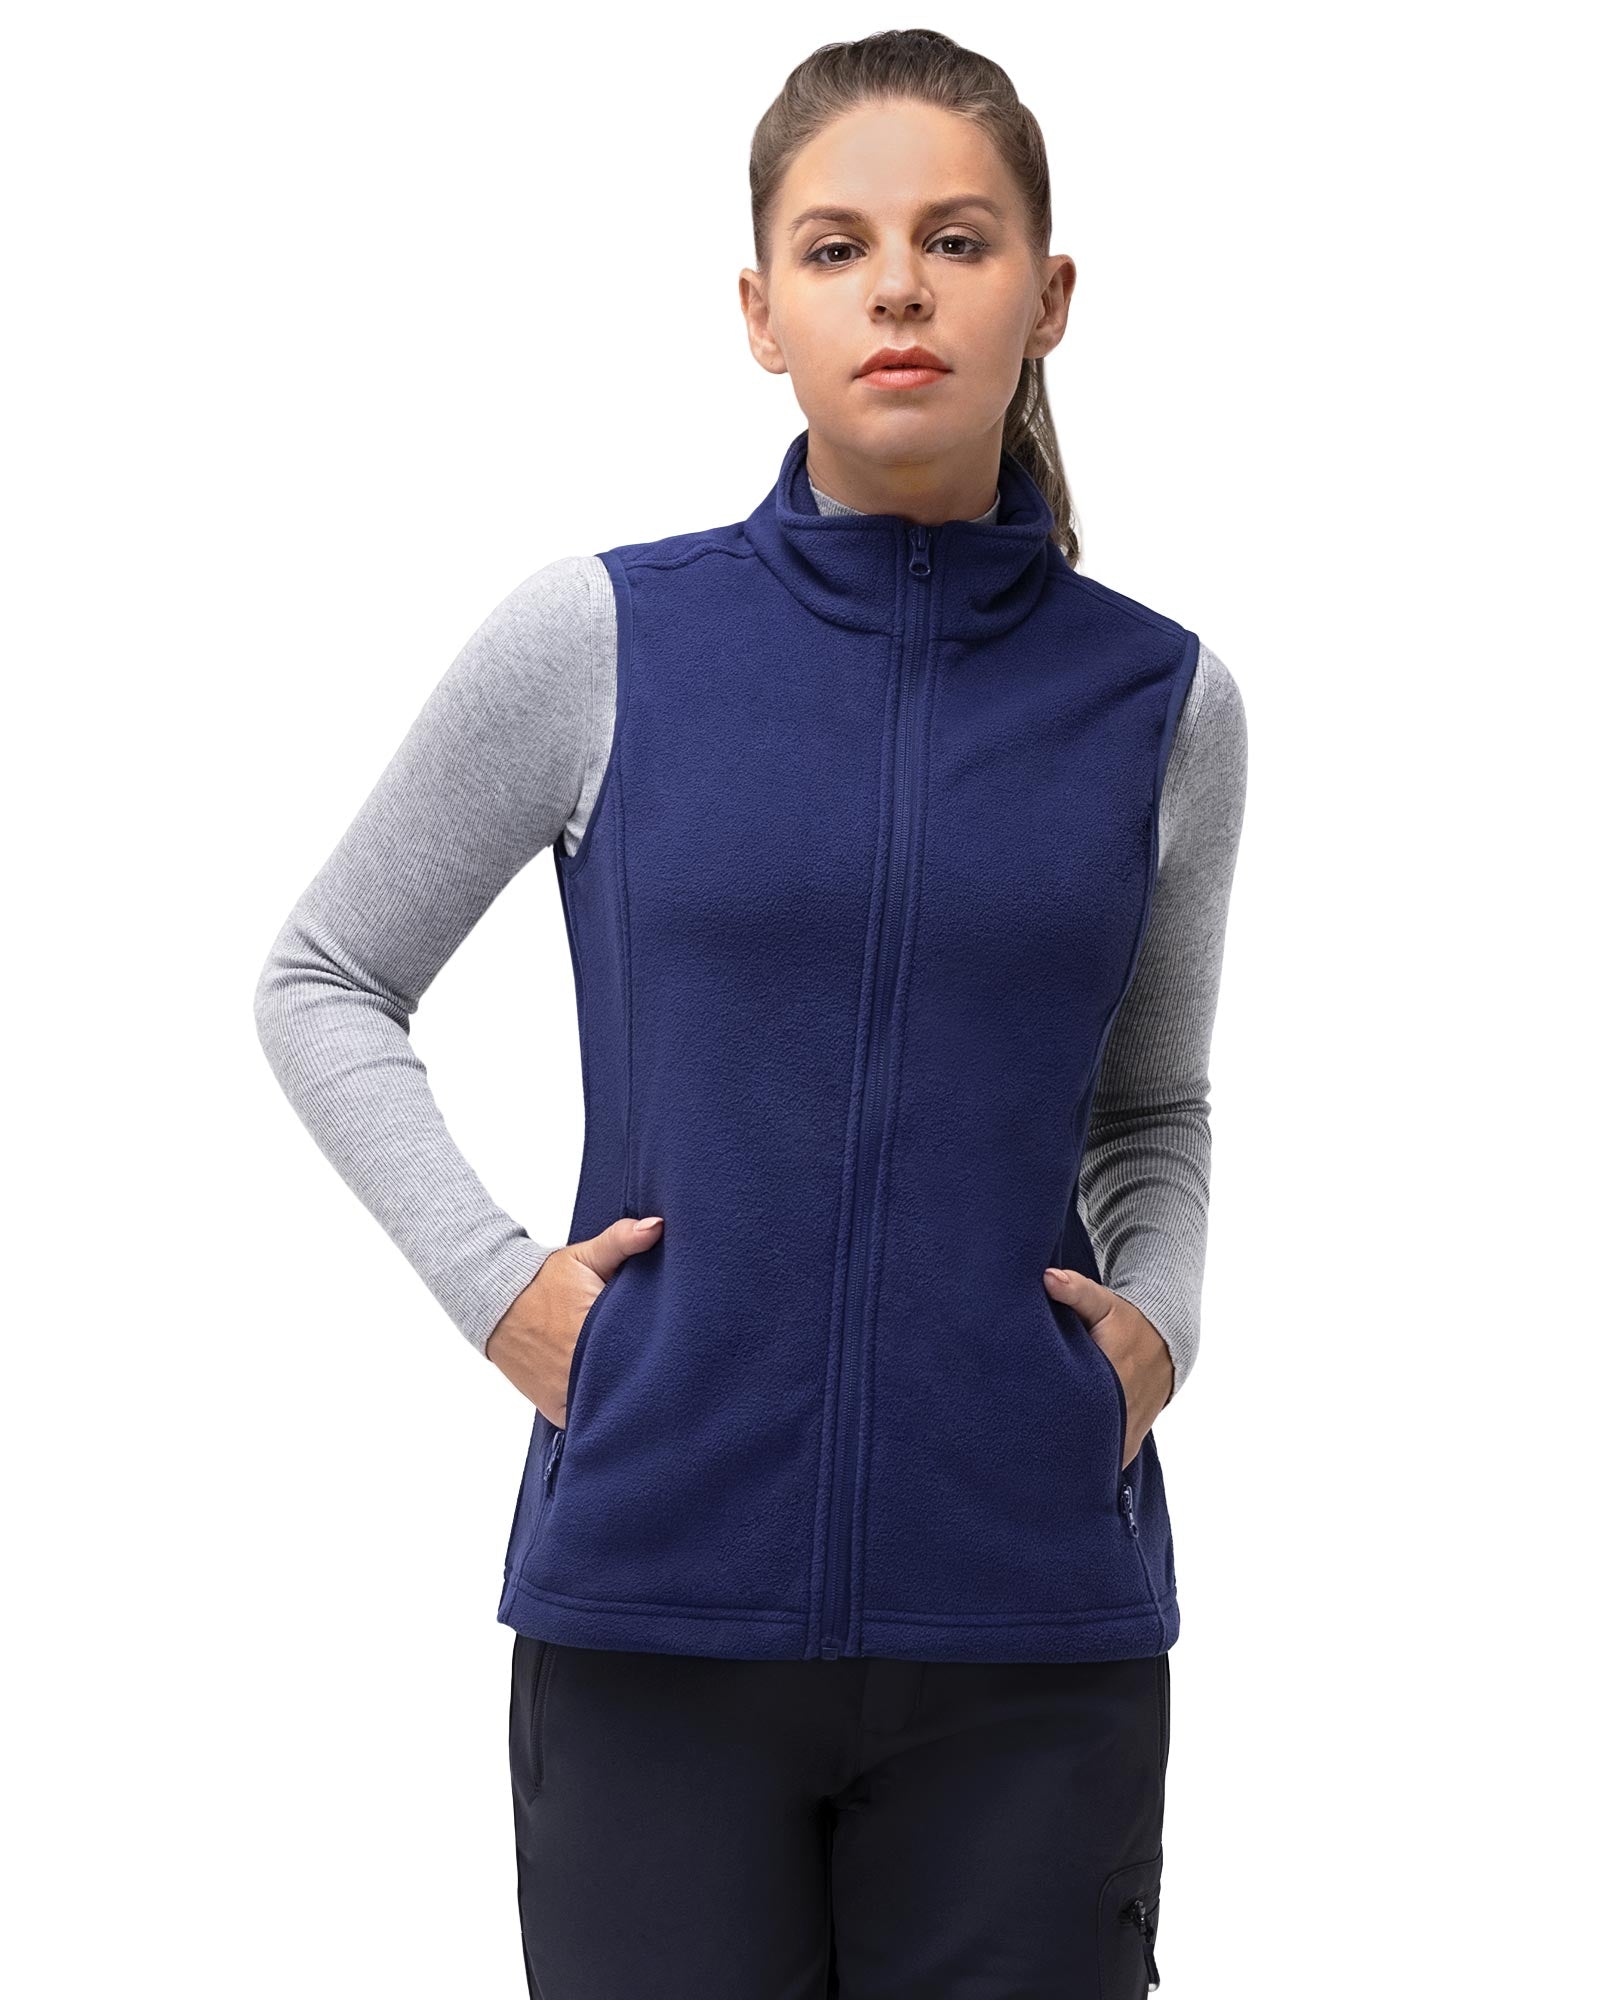 Women's 0.82 lbs Fleece Gilet Vest Outerwear with 4 Deep Pockets